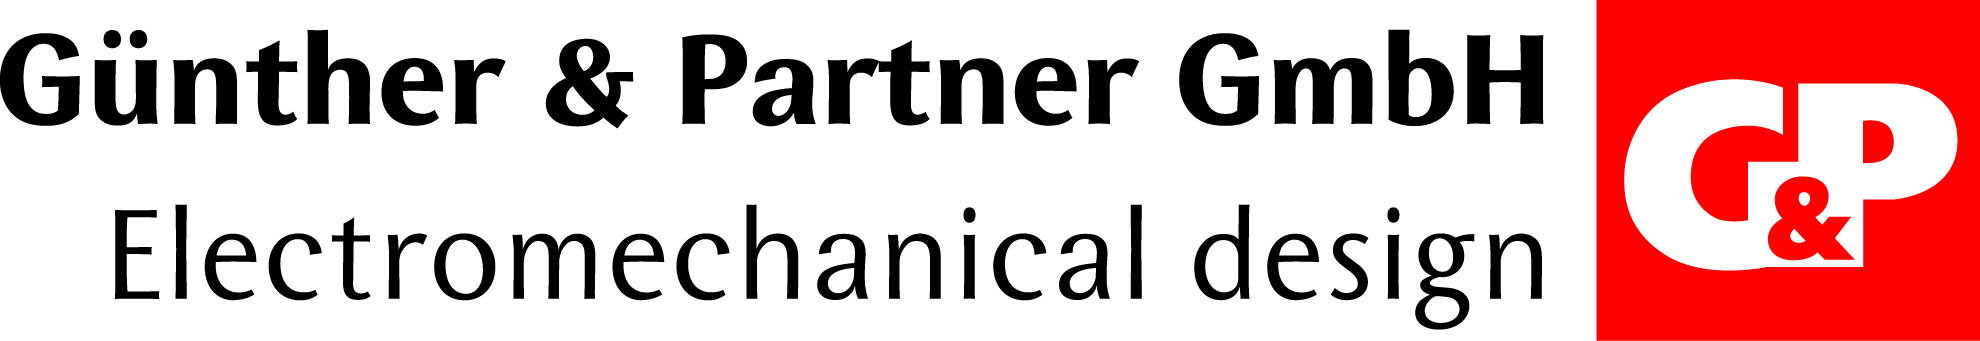 Günther & Partner GmbH